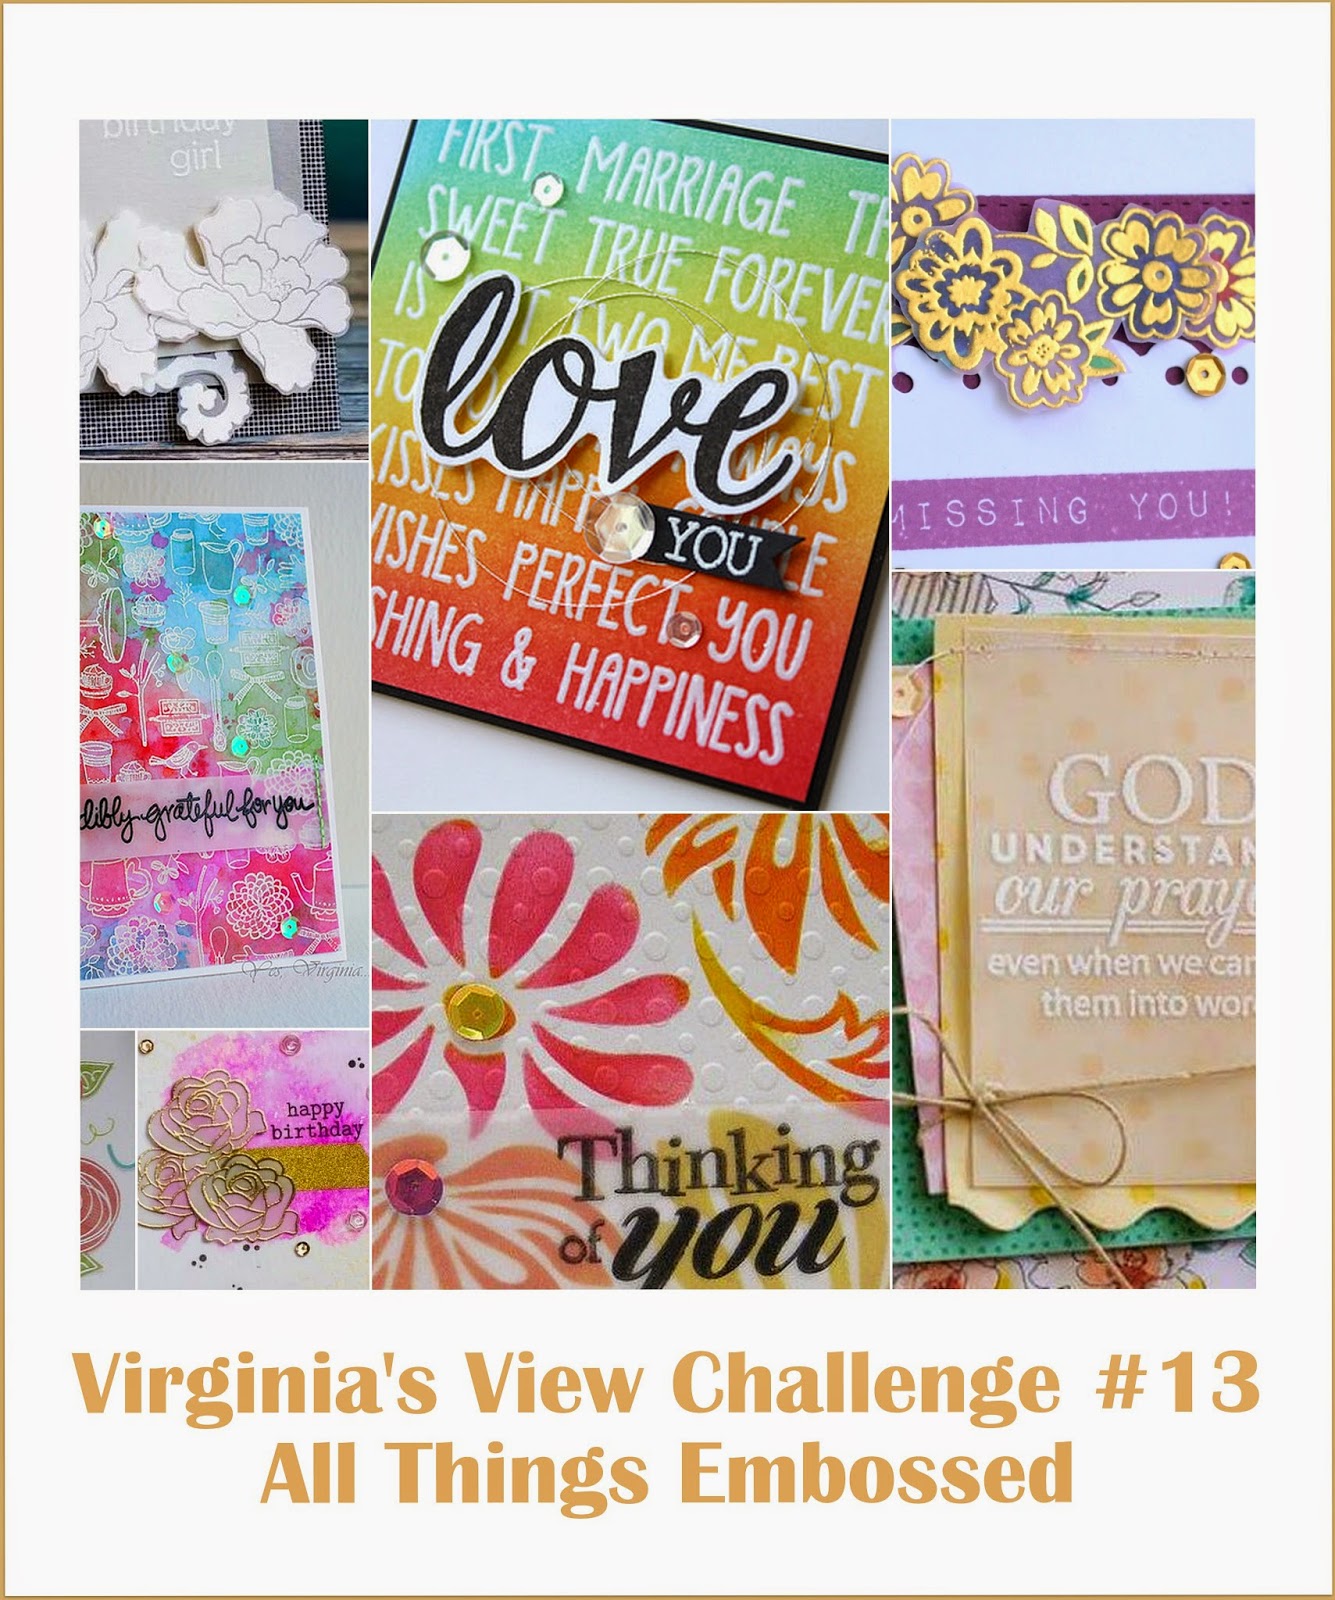 http://virginiasviewchallenge.blogspot.ie/2015/03/virginias-view-challenge-13_1.html